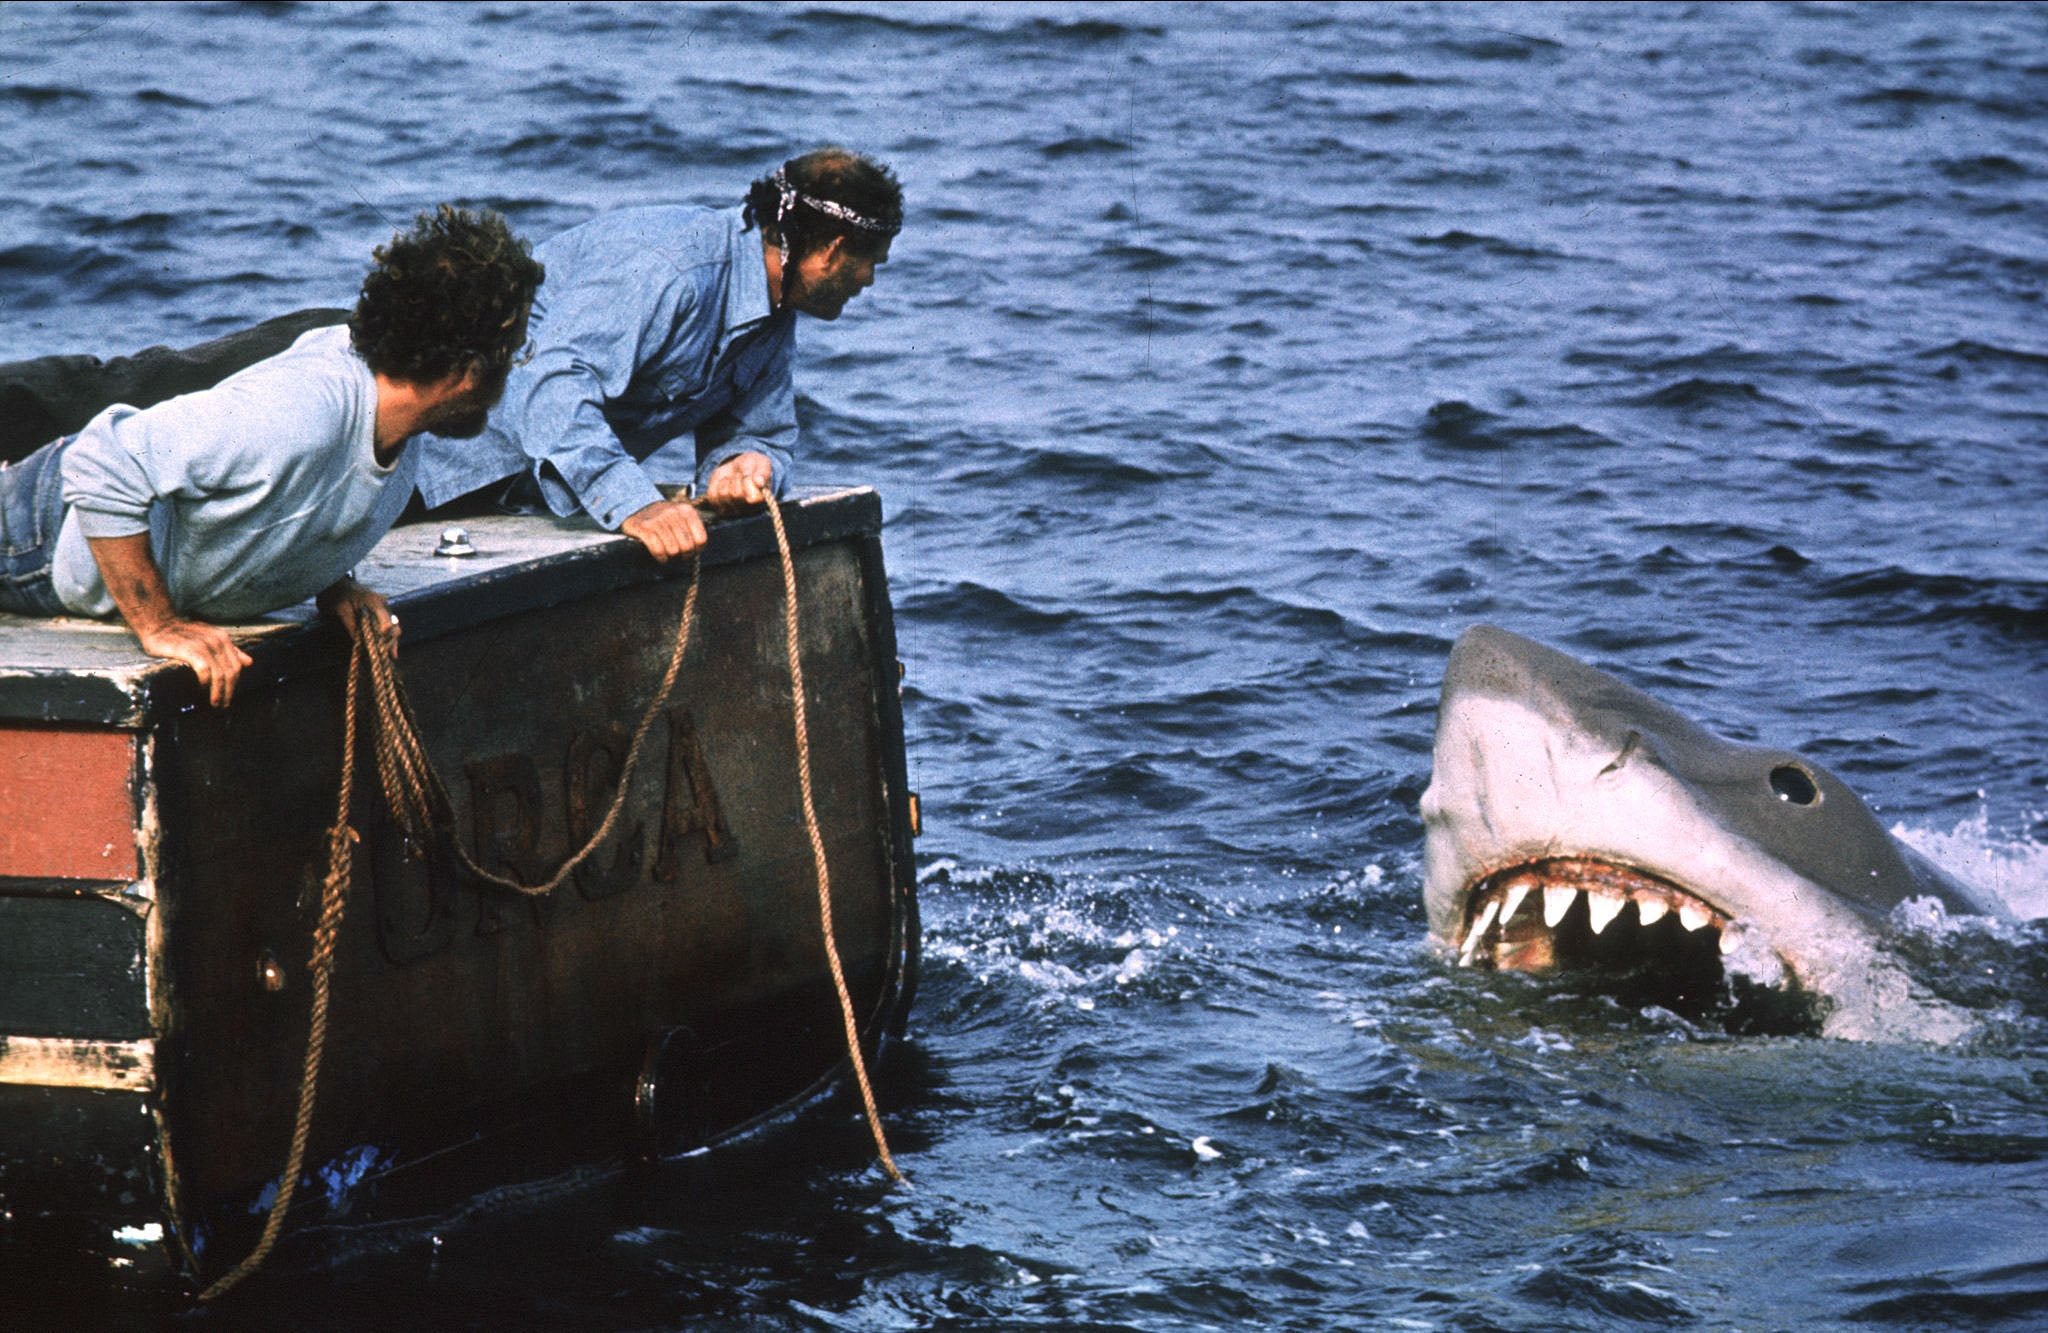 Jaws: Classic Film, Crummy Science - Scientific American